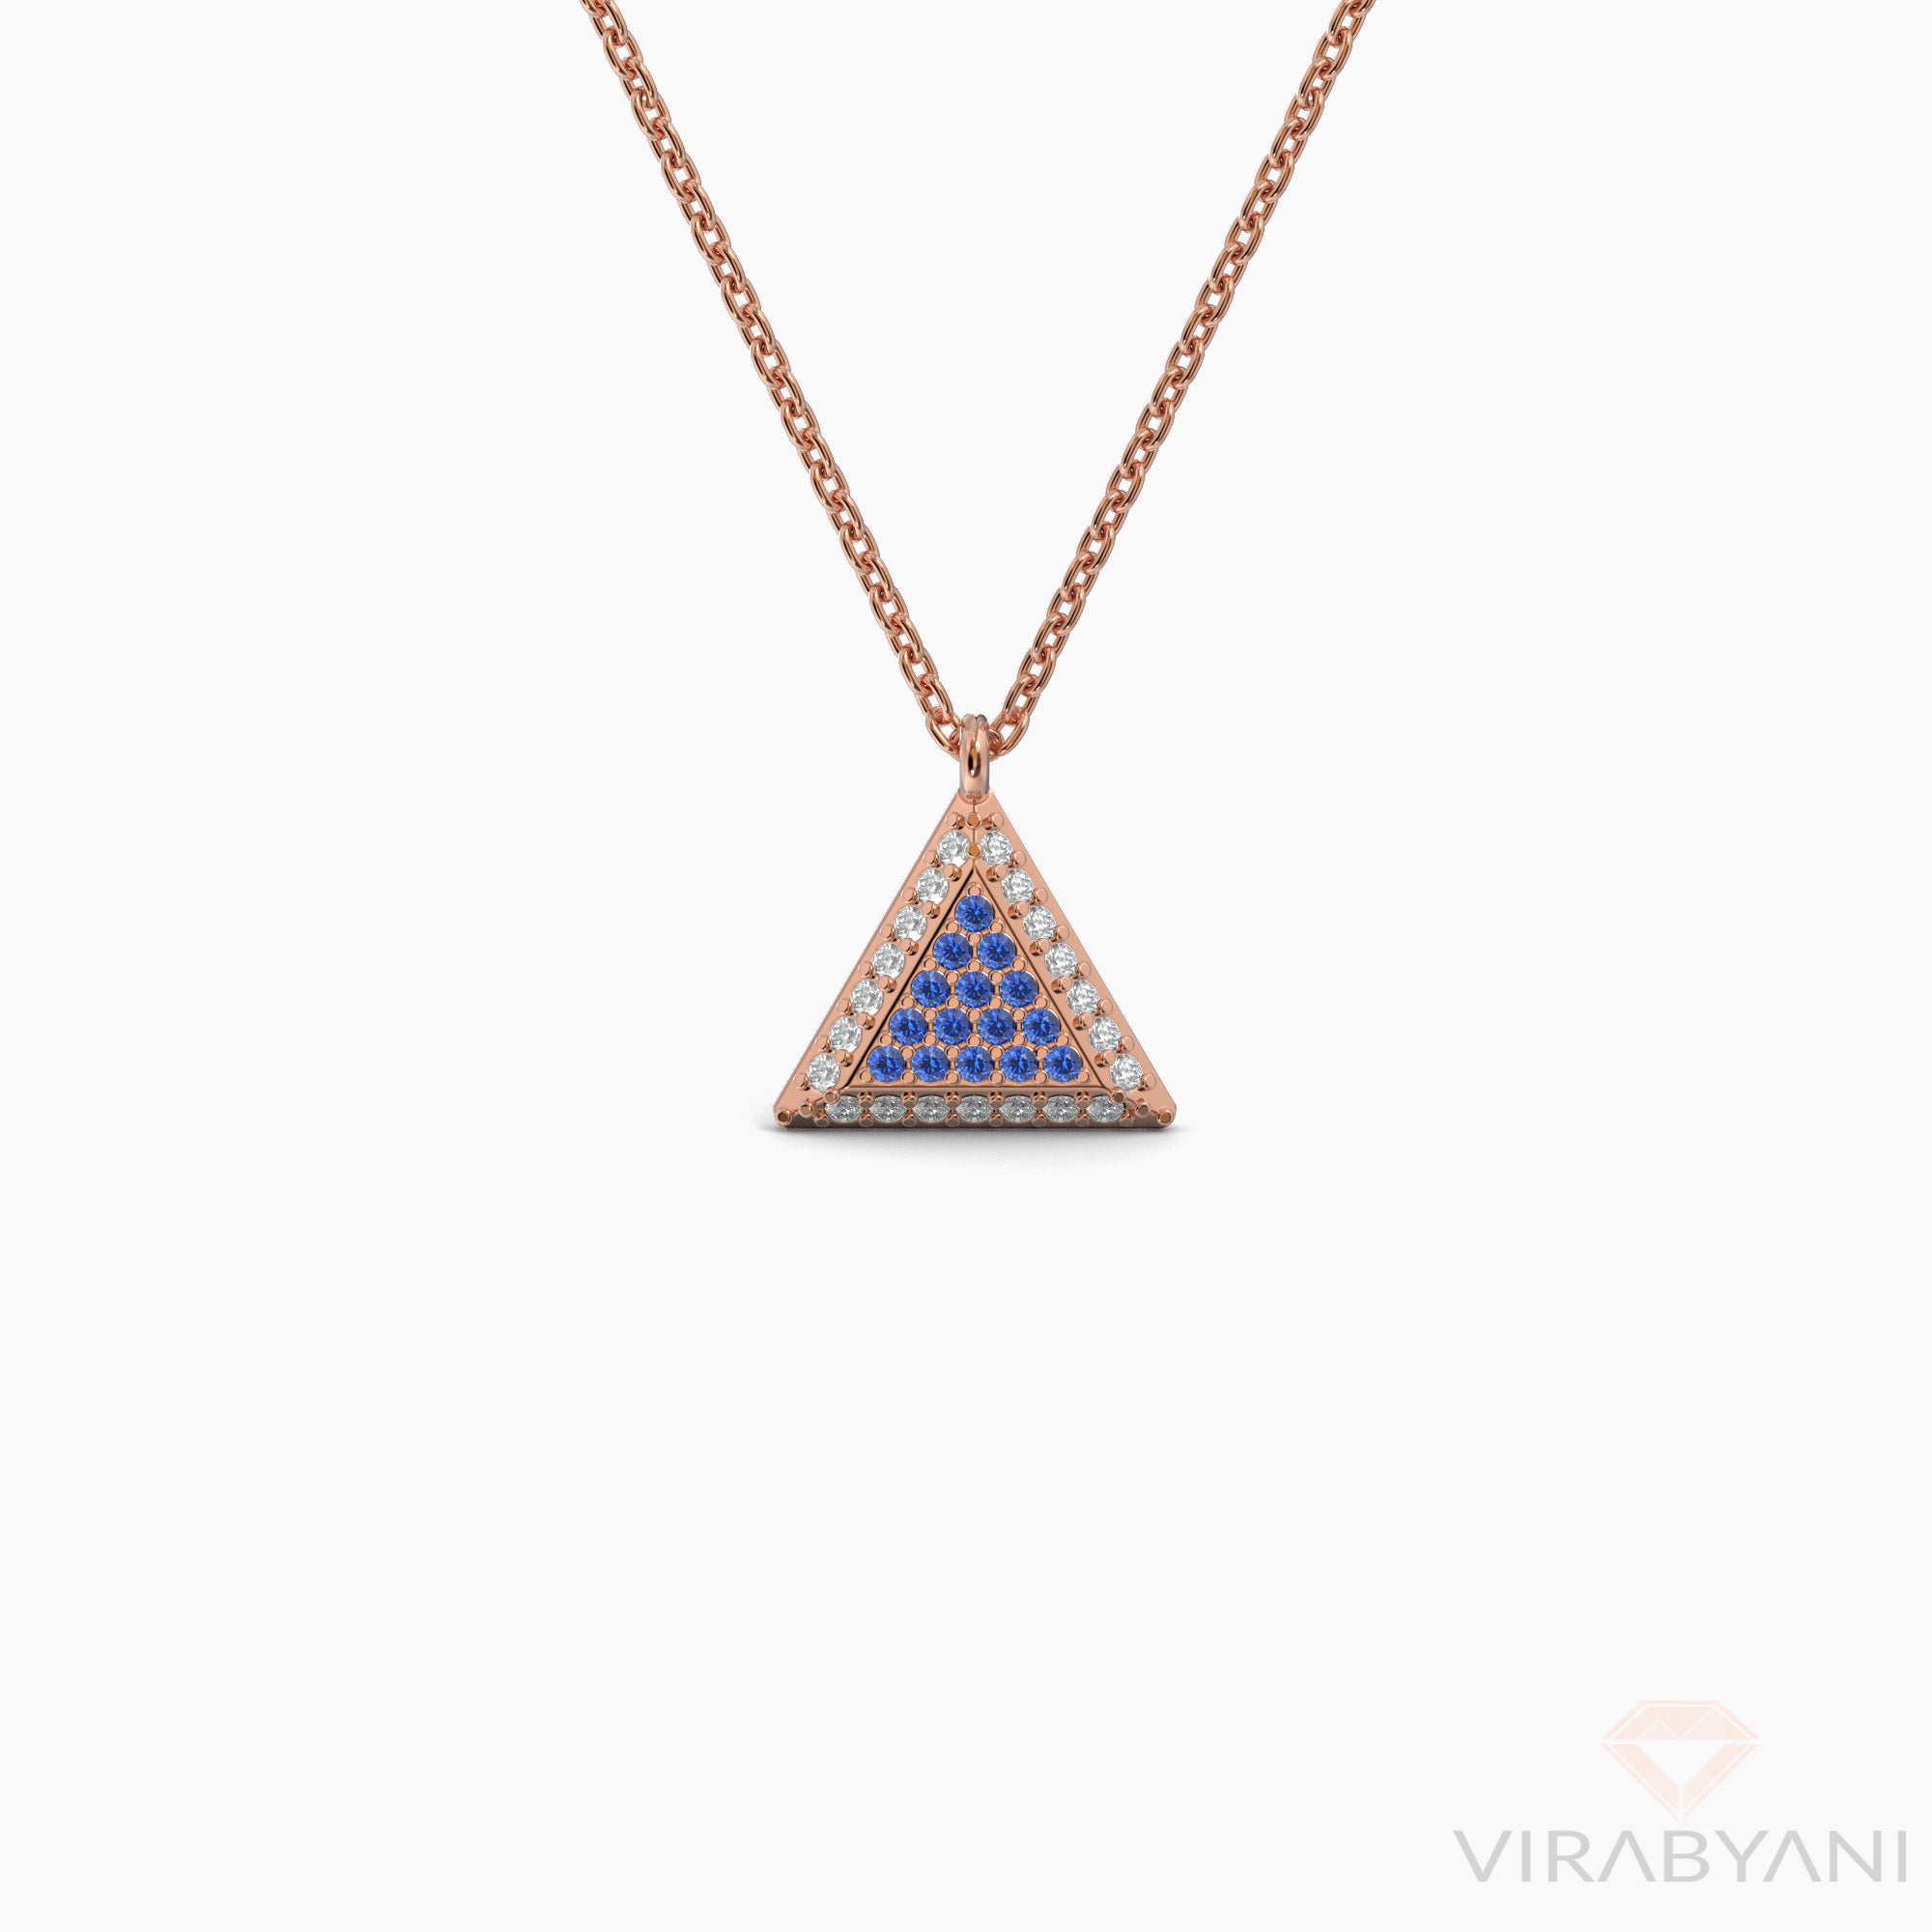 Double Sided Diamond & Sapphire Triangle Shaped AMoré Pavé Necklace